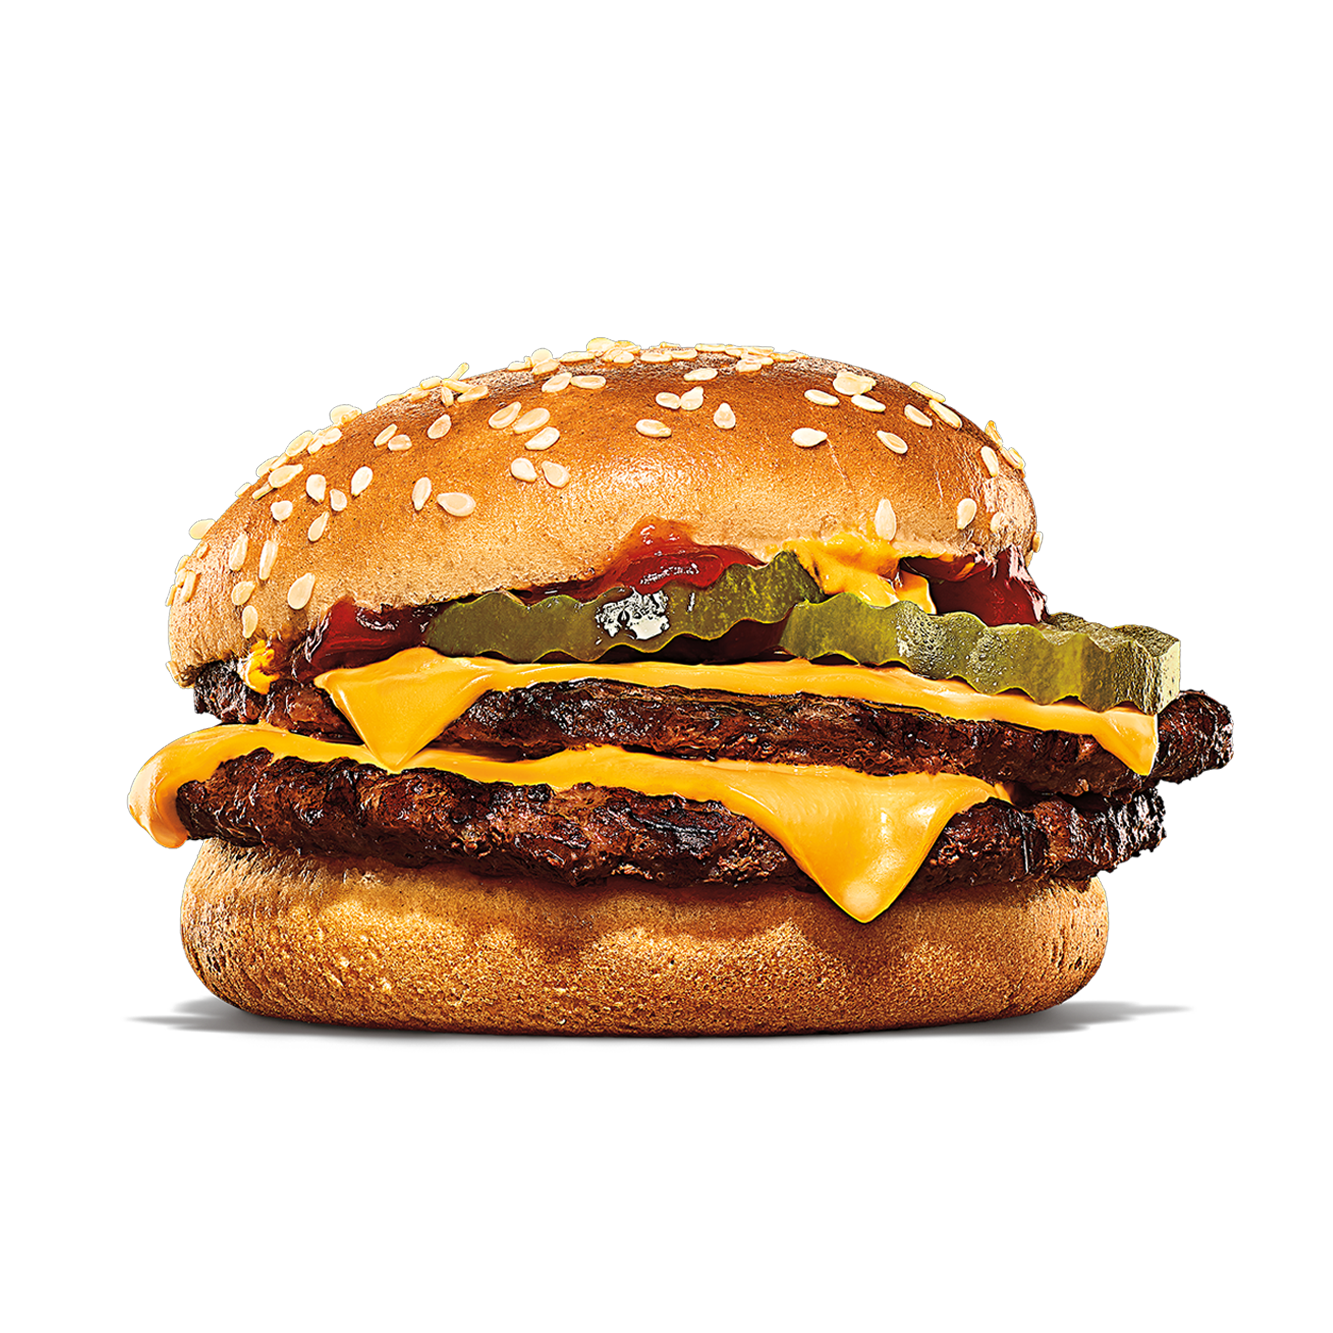 Burger King Rockland (781)878-6717